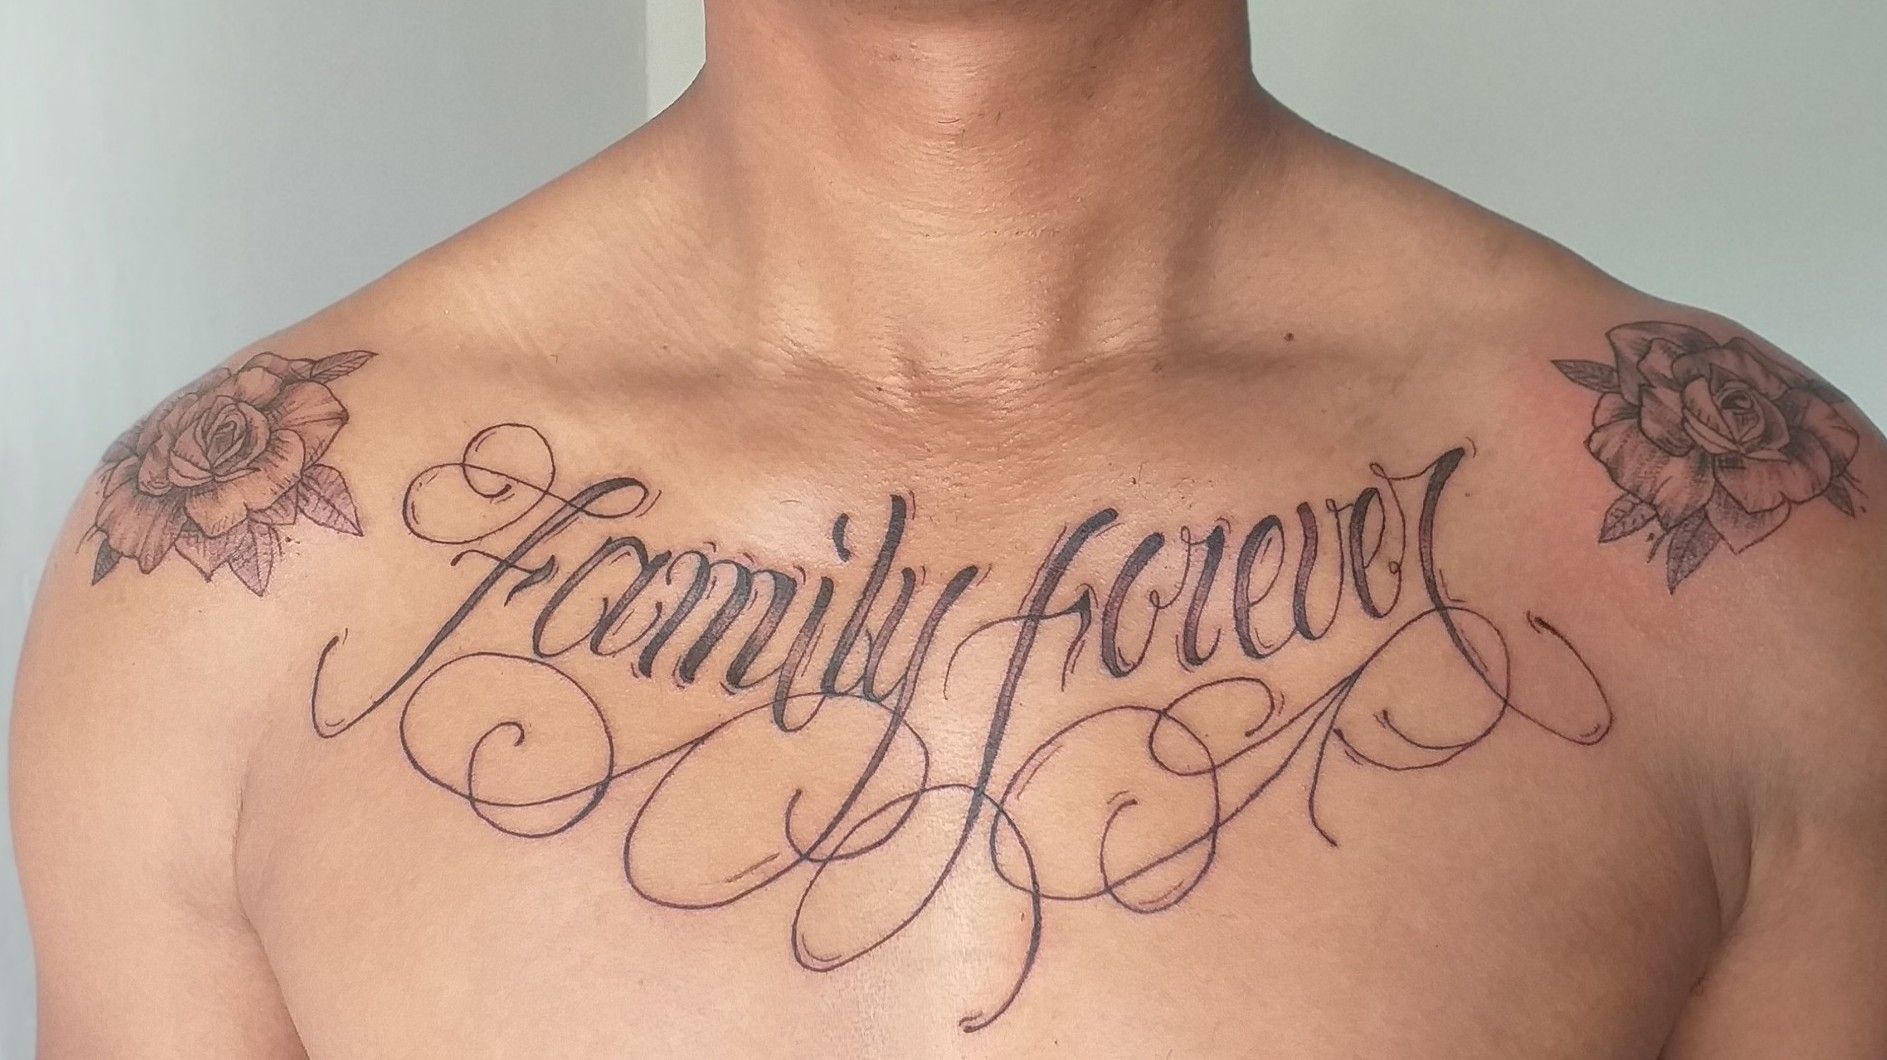 Family Forever Tattoo by michaelmedinaart on DeviantArt